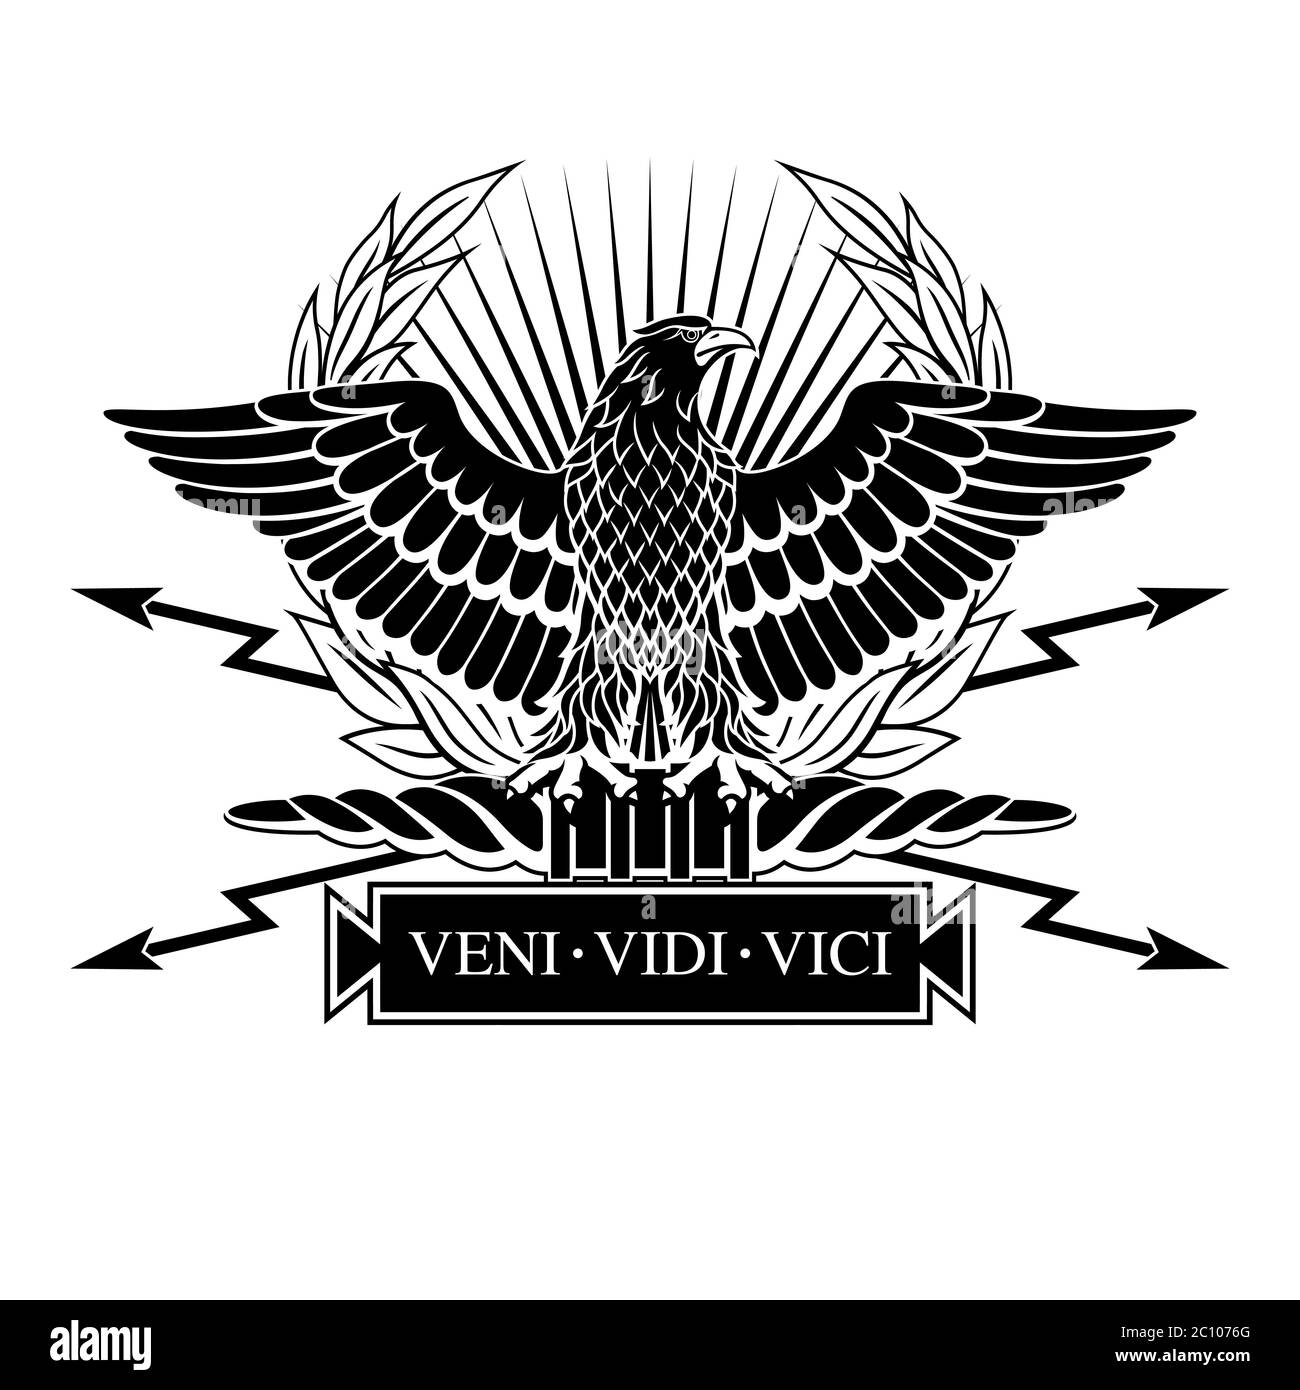 Veni vidi vici latin quote poster translation i Vector Image